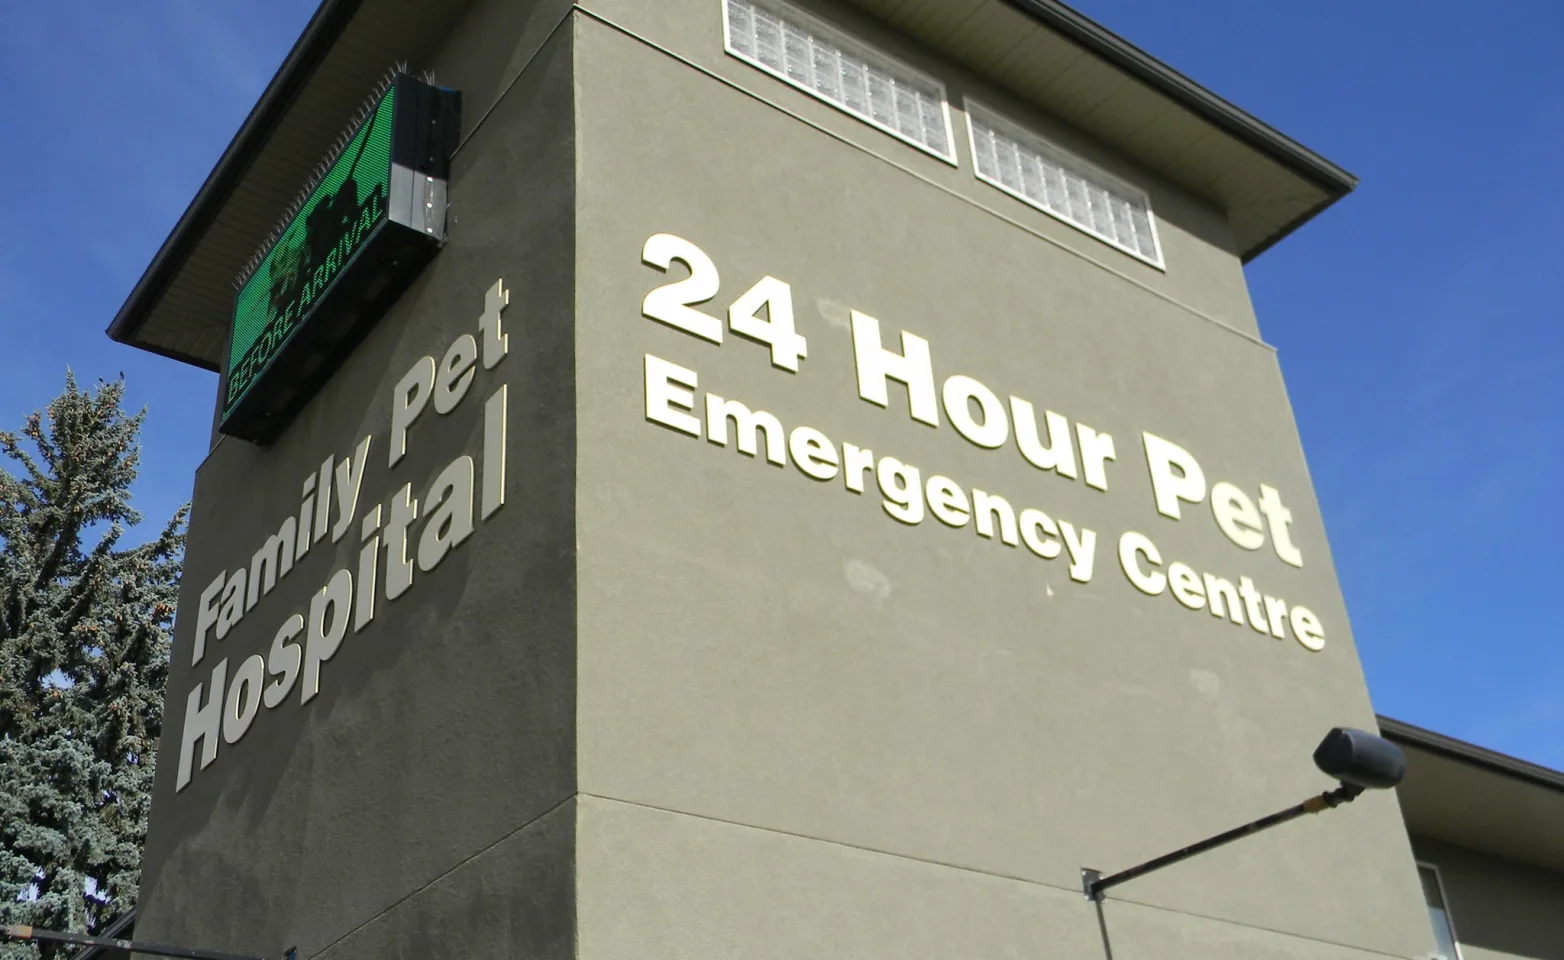 Family Pet Hospital & 24 Hour Centre Front Exterior